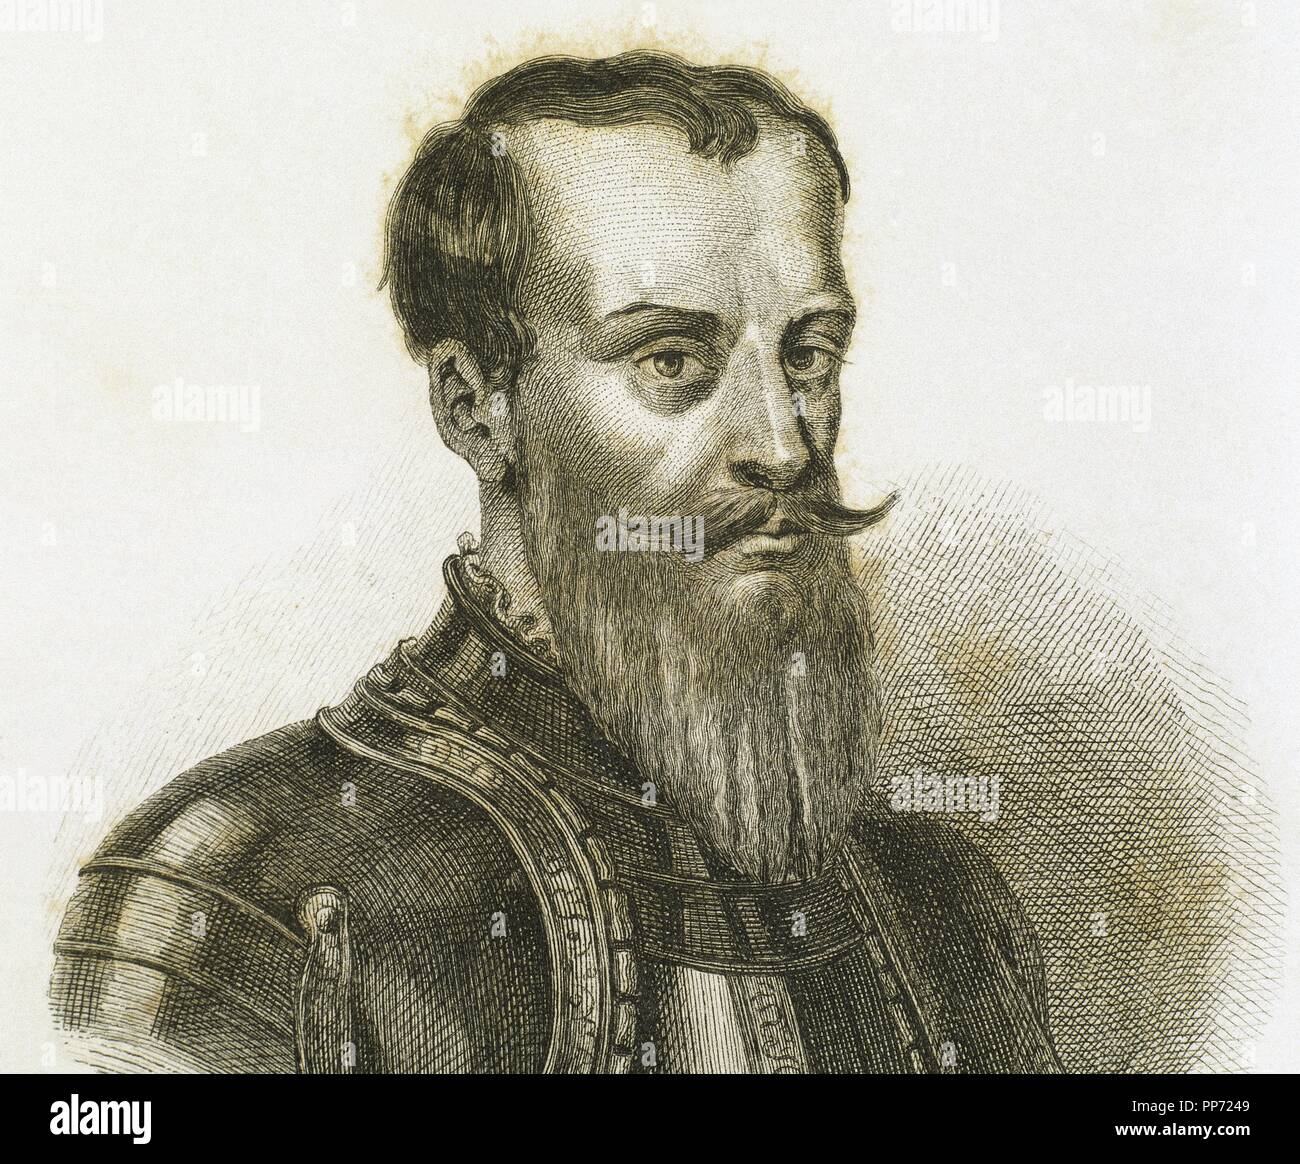 Jan Karol Chodkiewicz (1560-1621). Polnische Militär, Kommandant der PolishÐLithuanian Commonwealth Armee. Porträt. Gravur. Stockfoto